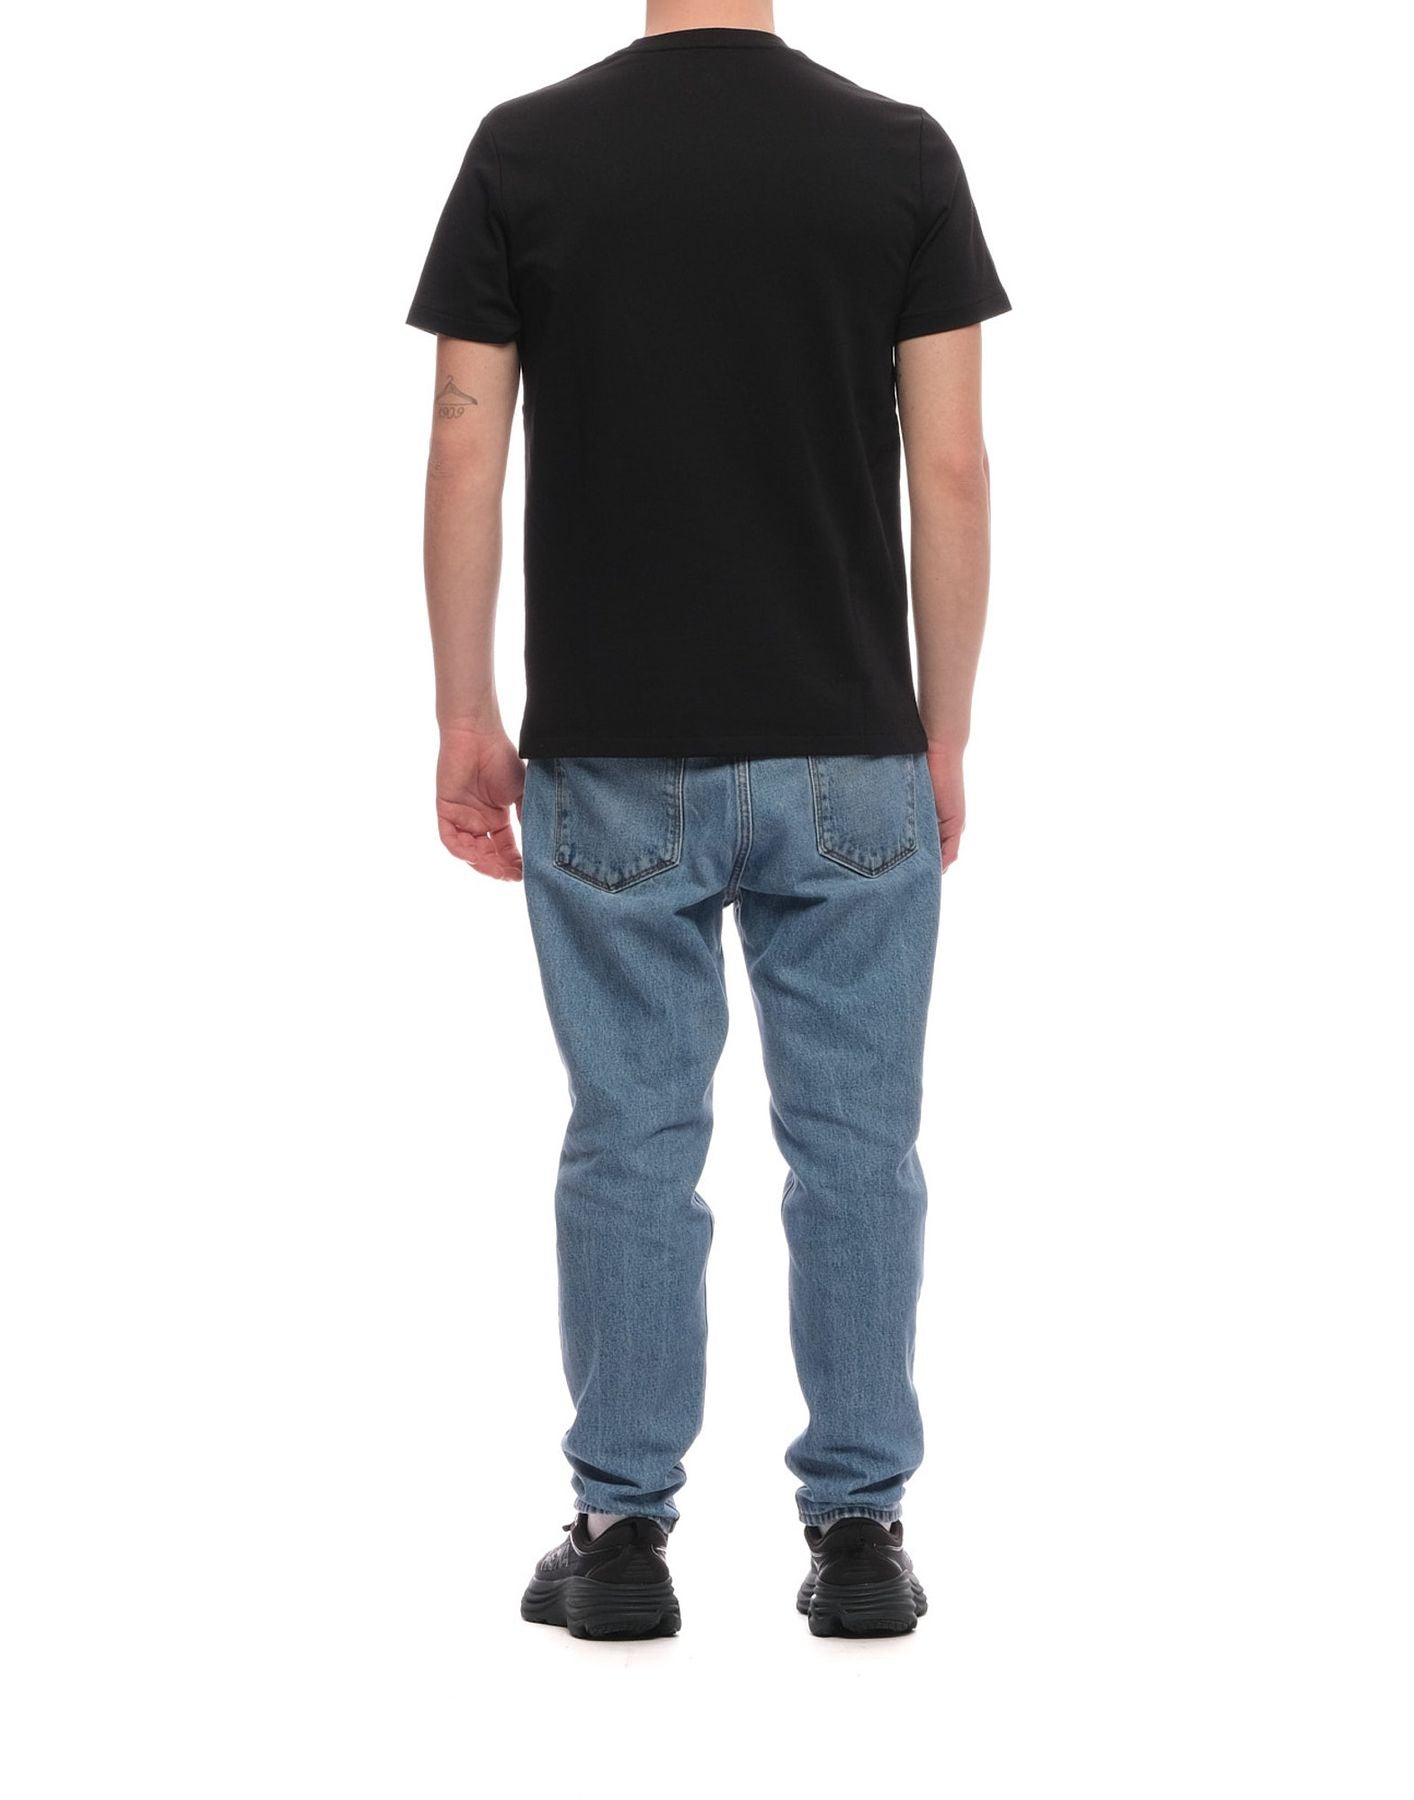 T-shirt for man 714899619003 BLACK Polo Ralph Lauren